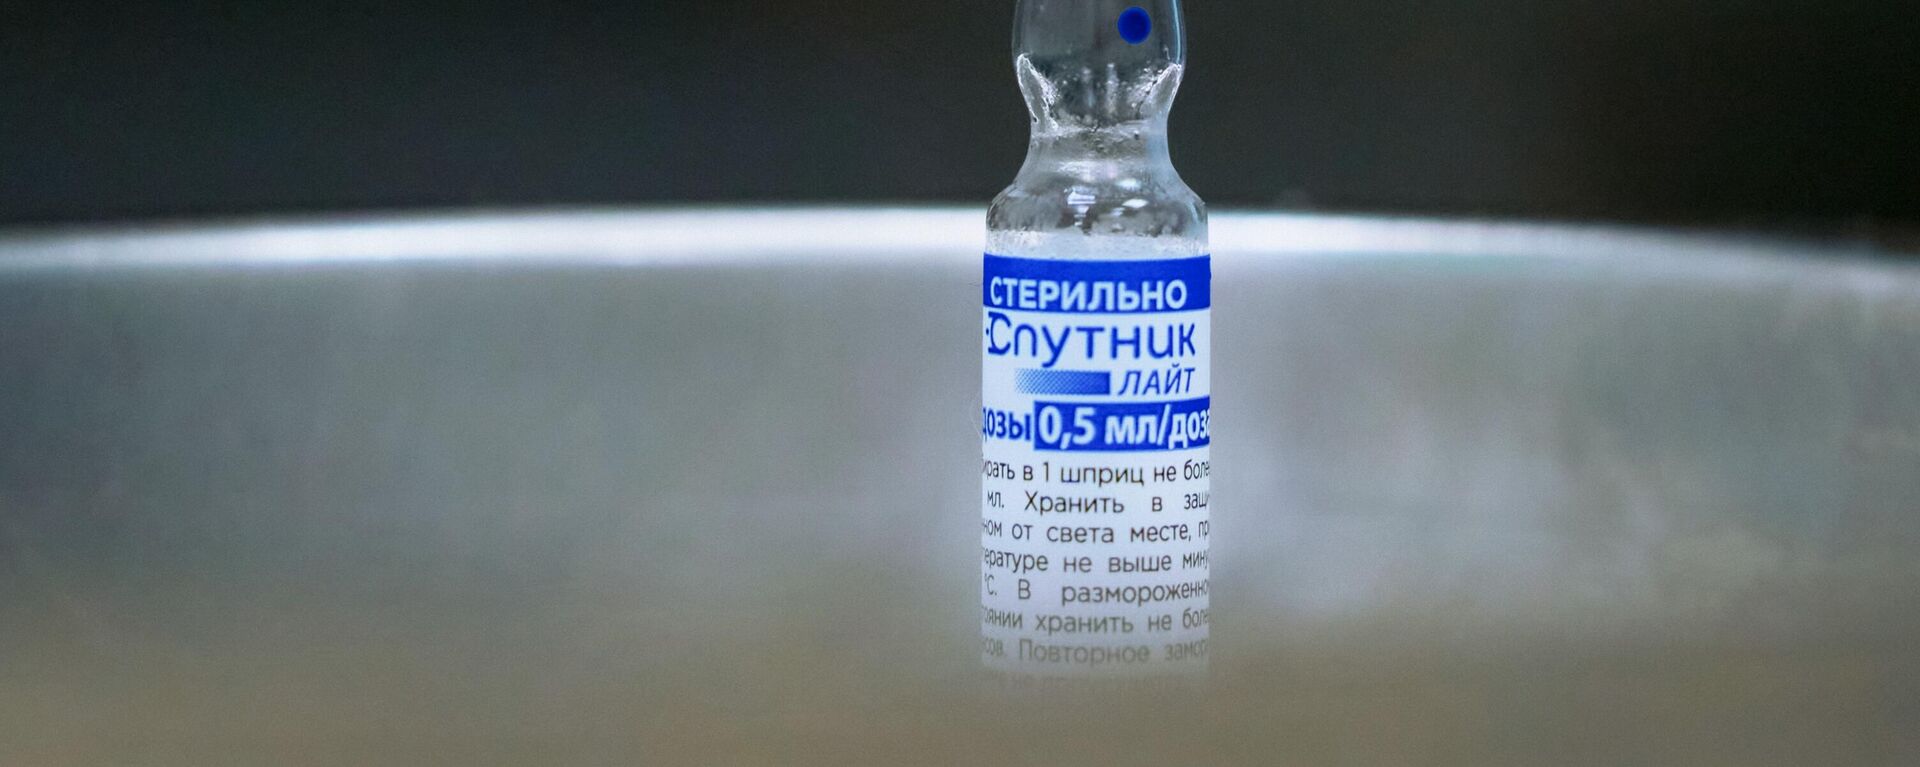 Vacuna monodosis rusa Sputnik Light - Sputnik Mundo, 1920, 22.10.2021